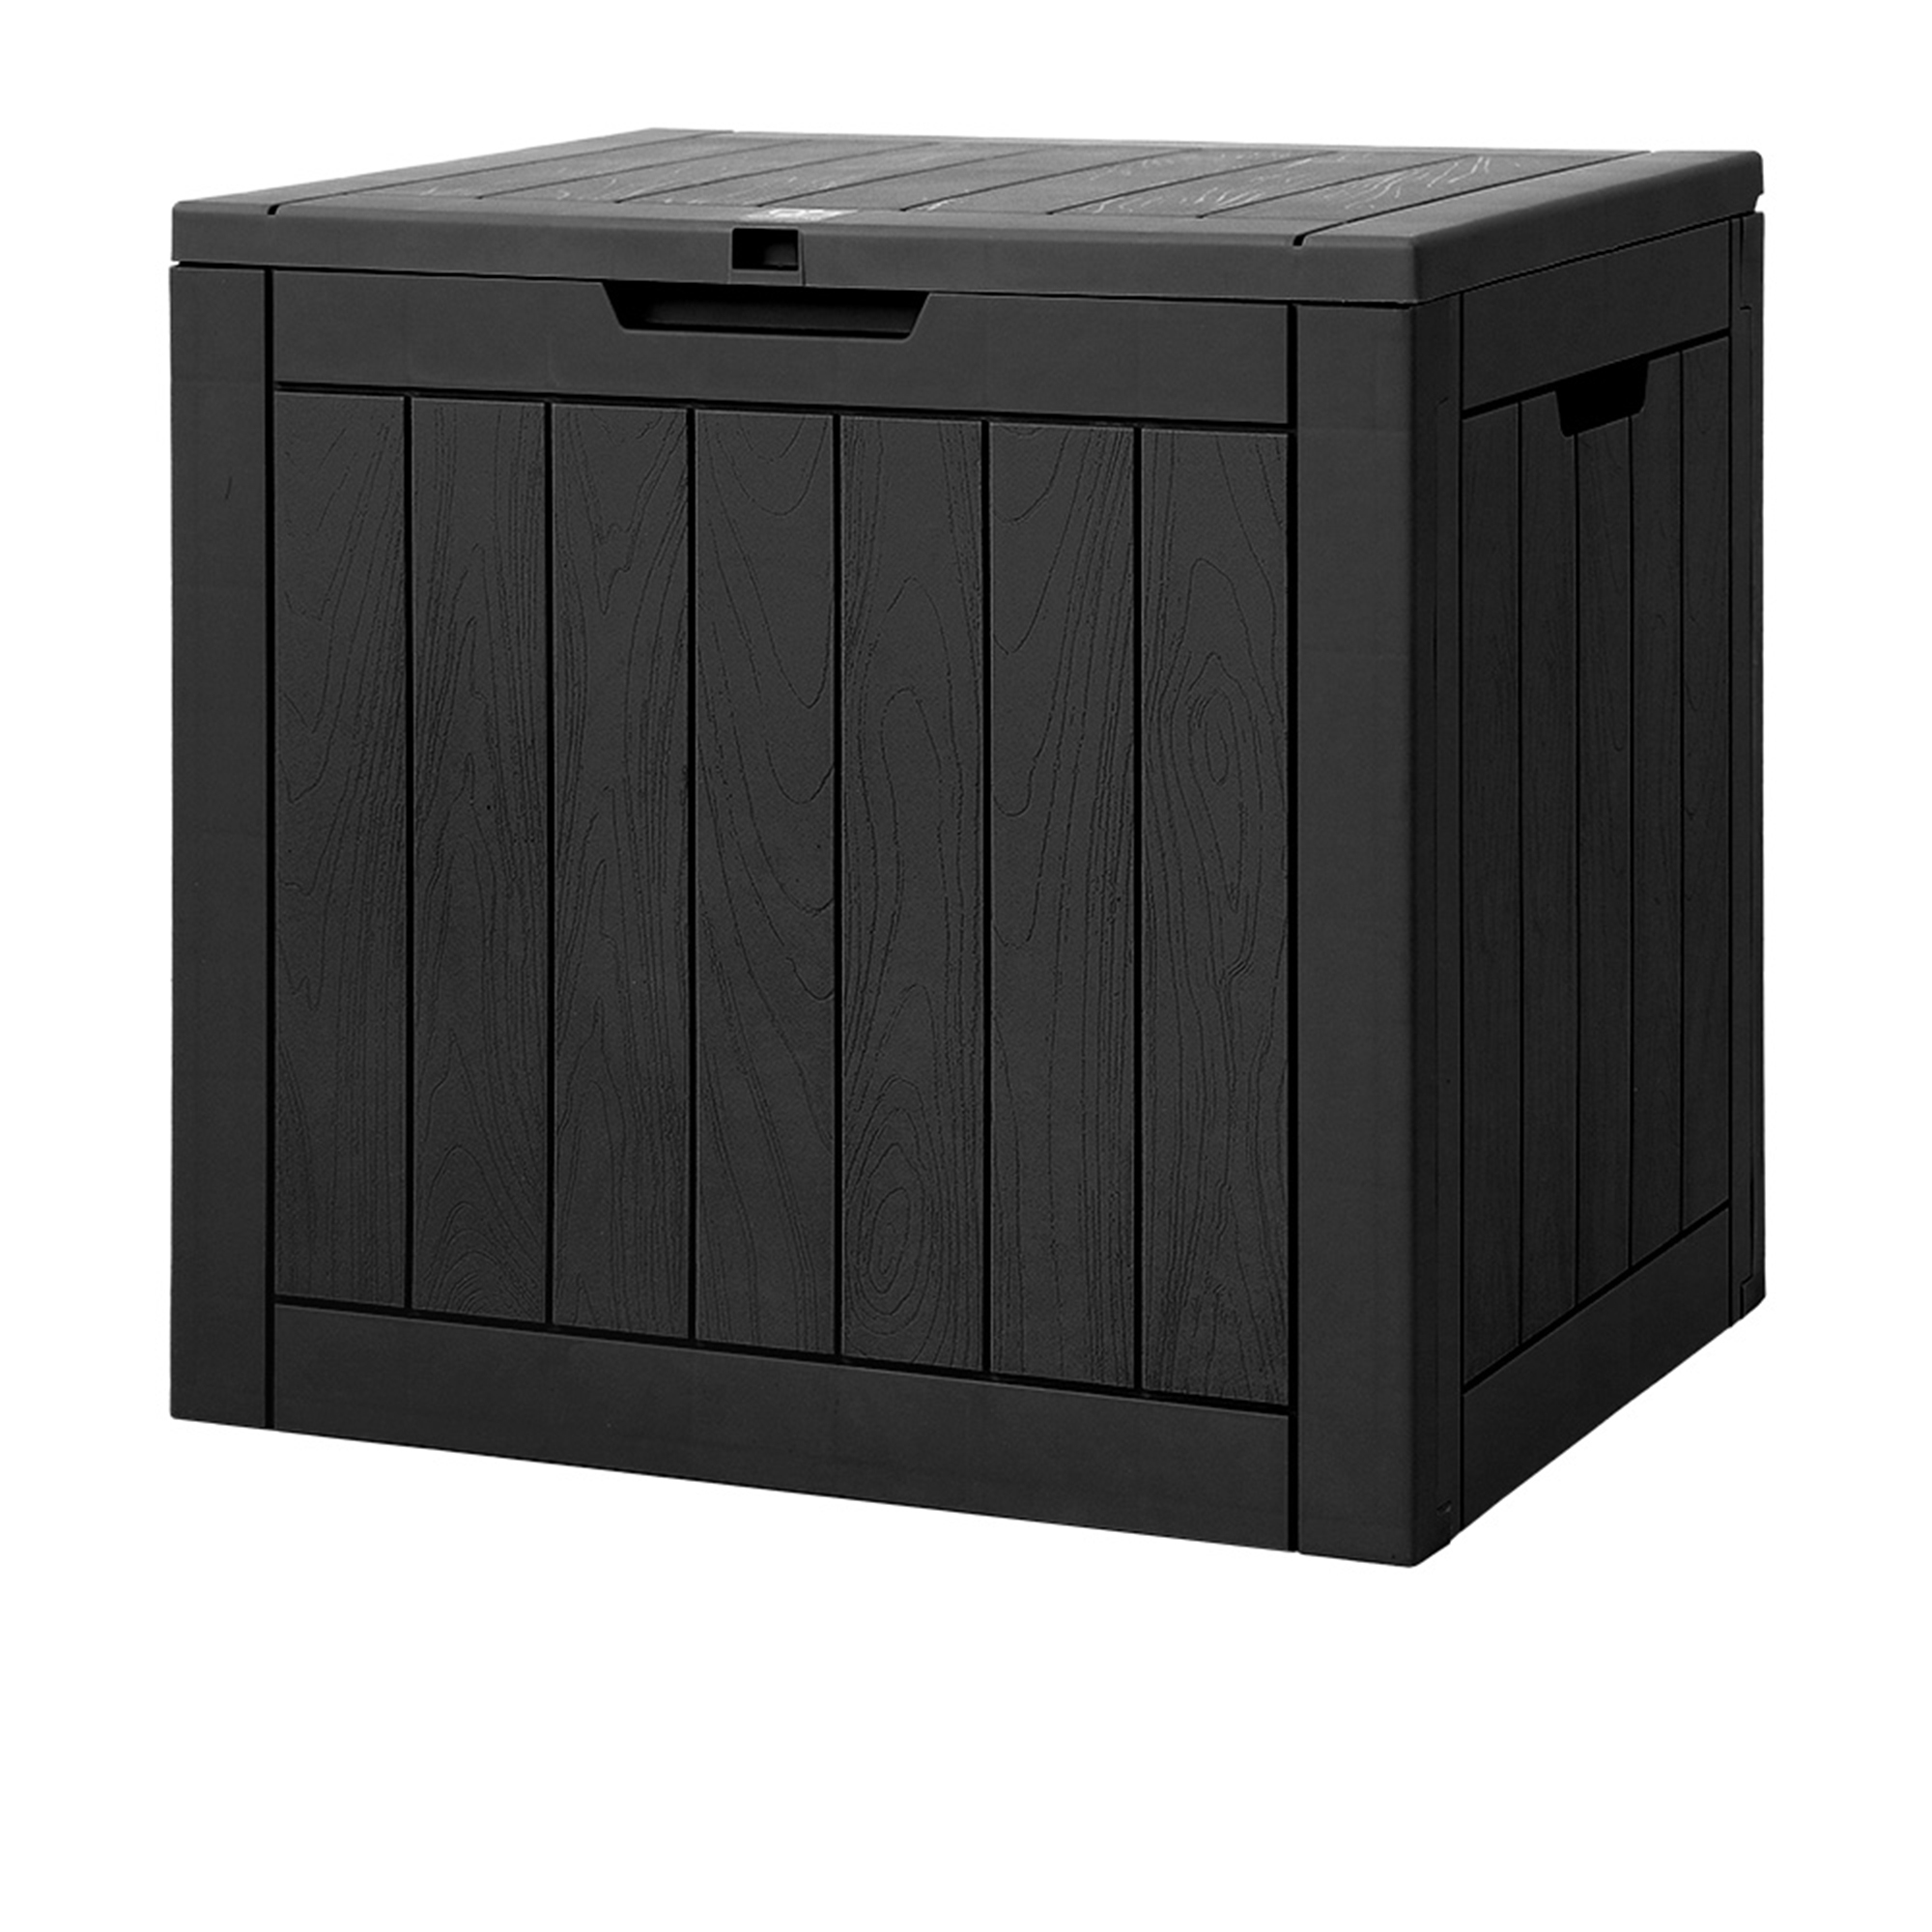 Gardeon Outdoor Storage Box 118L Black Image 1